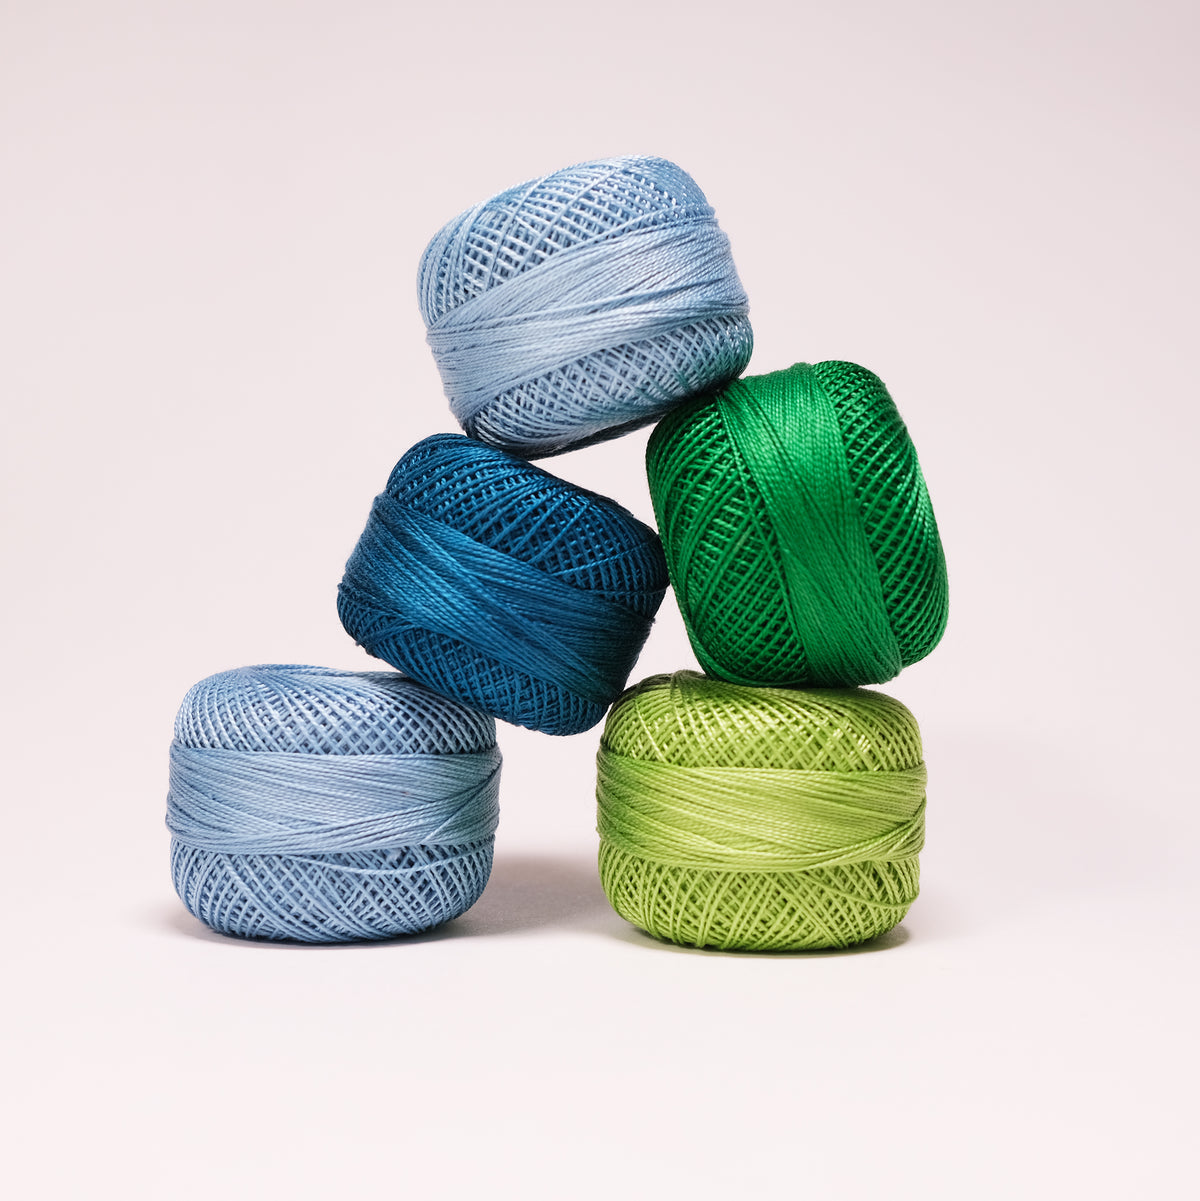 DMC 3347 Pearl Cotton Thread Size 8 Size 5 Medium Yellow Green -   Denmark